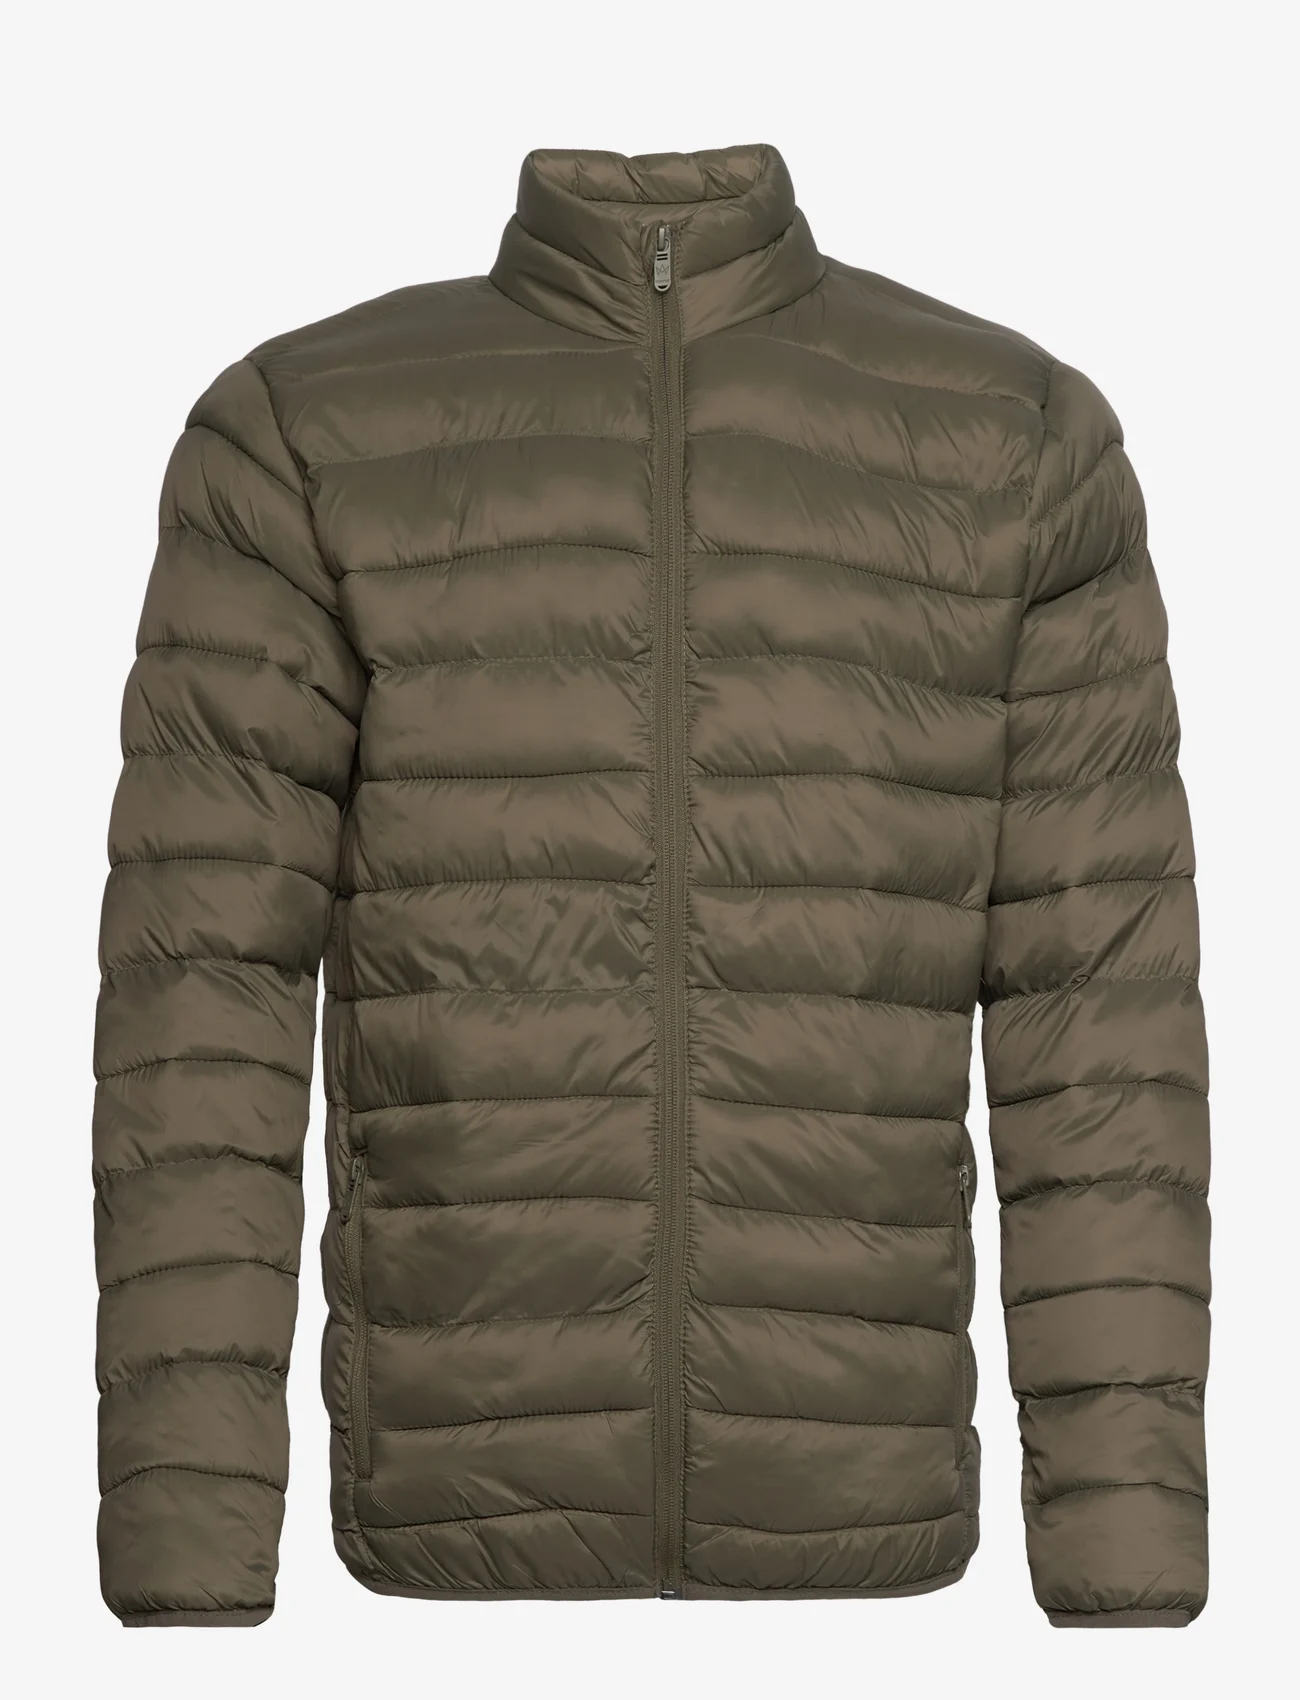 Kronstadt - Bo Light High neck jacket - winter jackets - army - 0